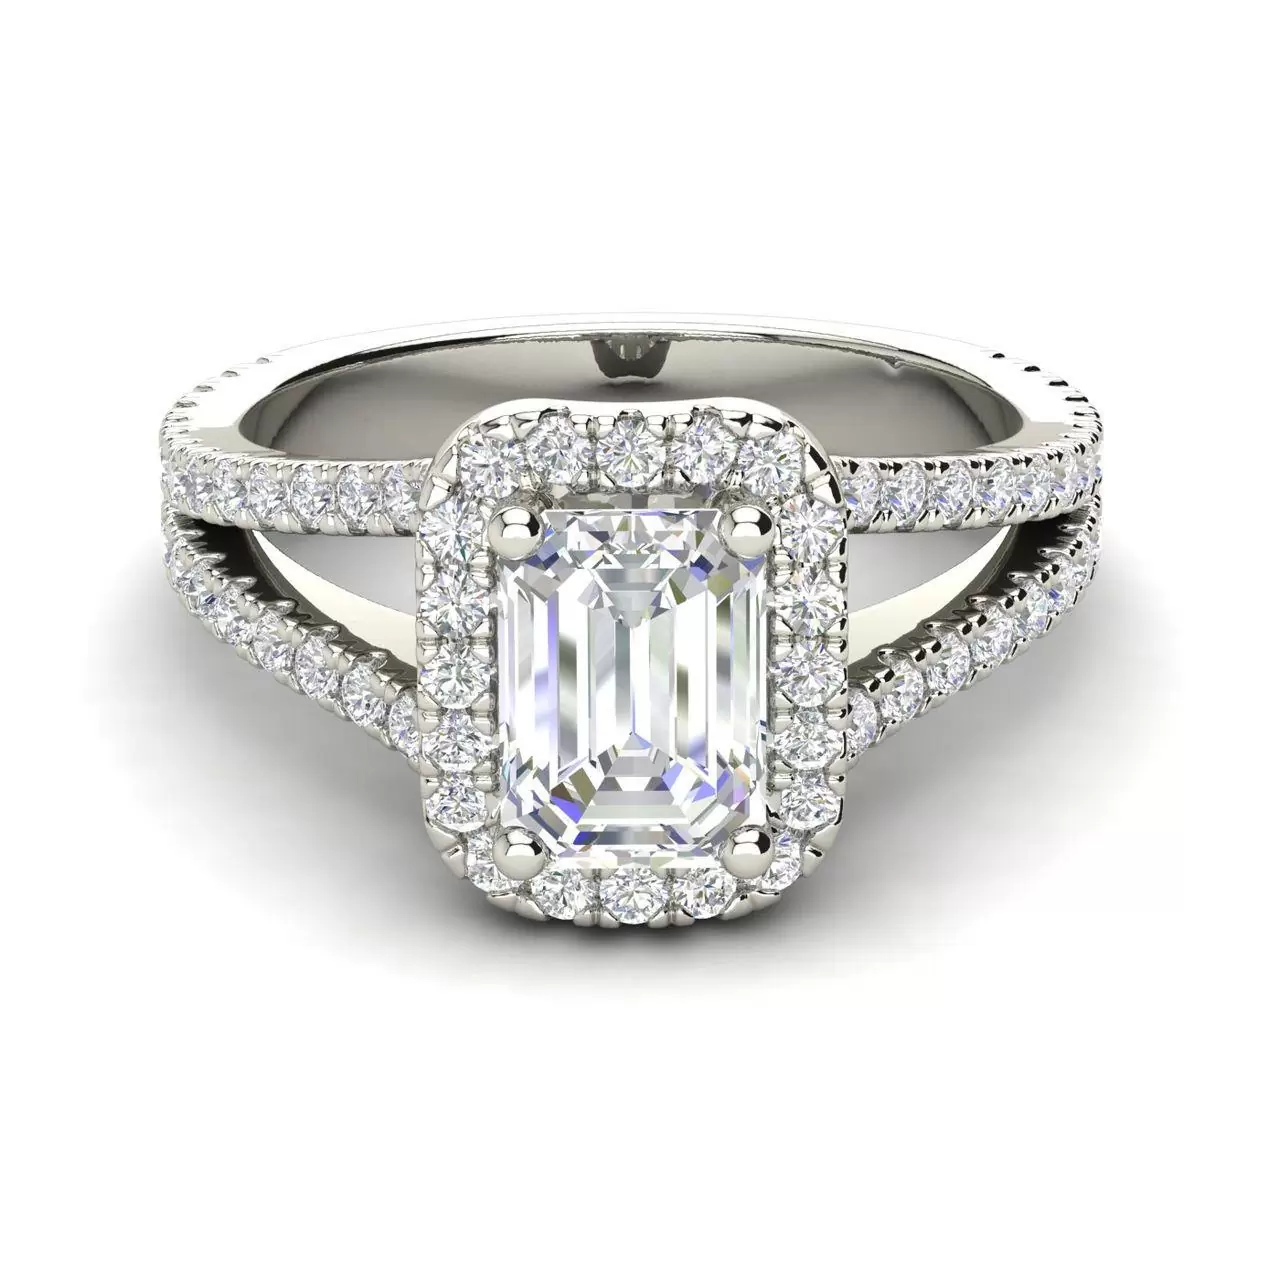 Pave Halo 1.9 Carat Emerald Cut Diamond Engagement Ring